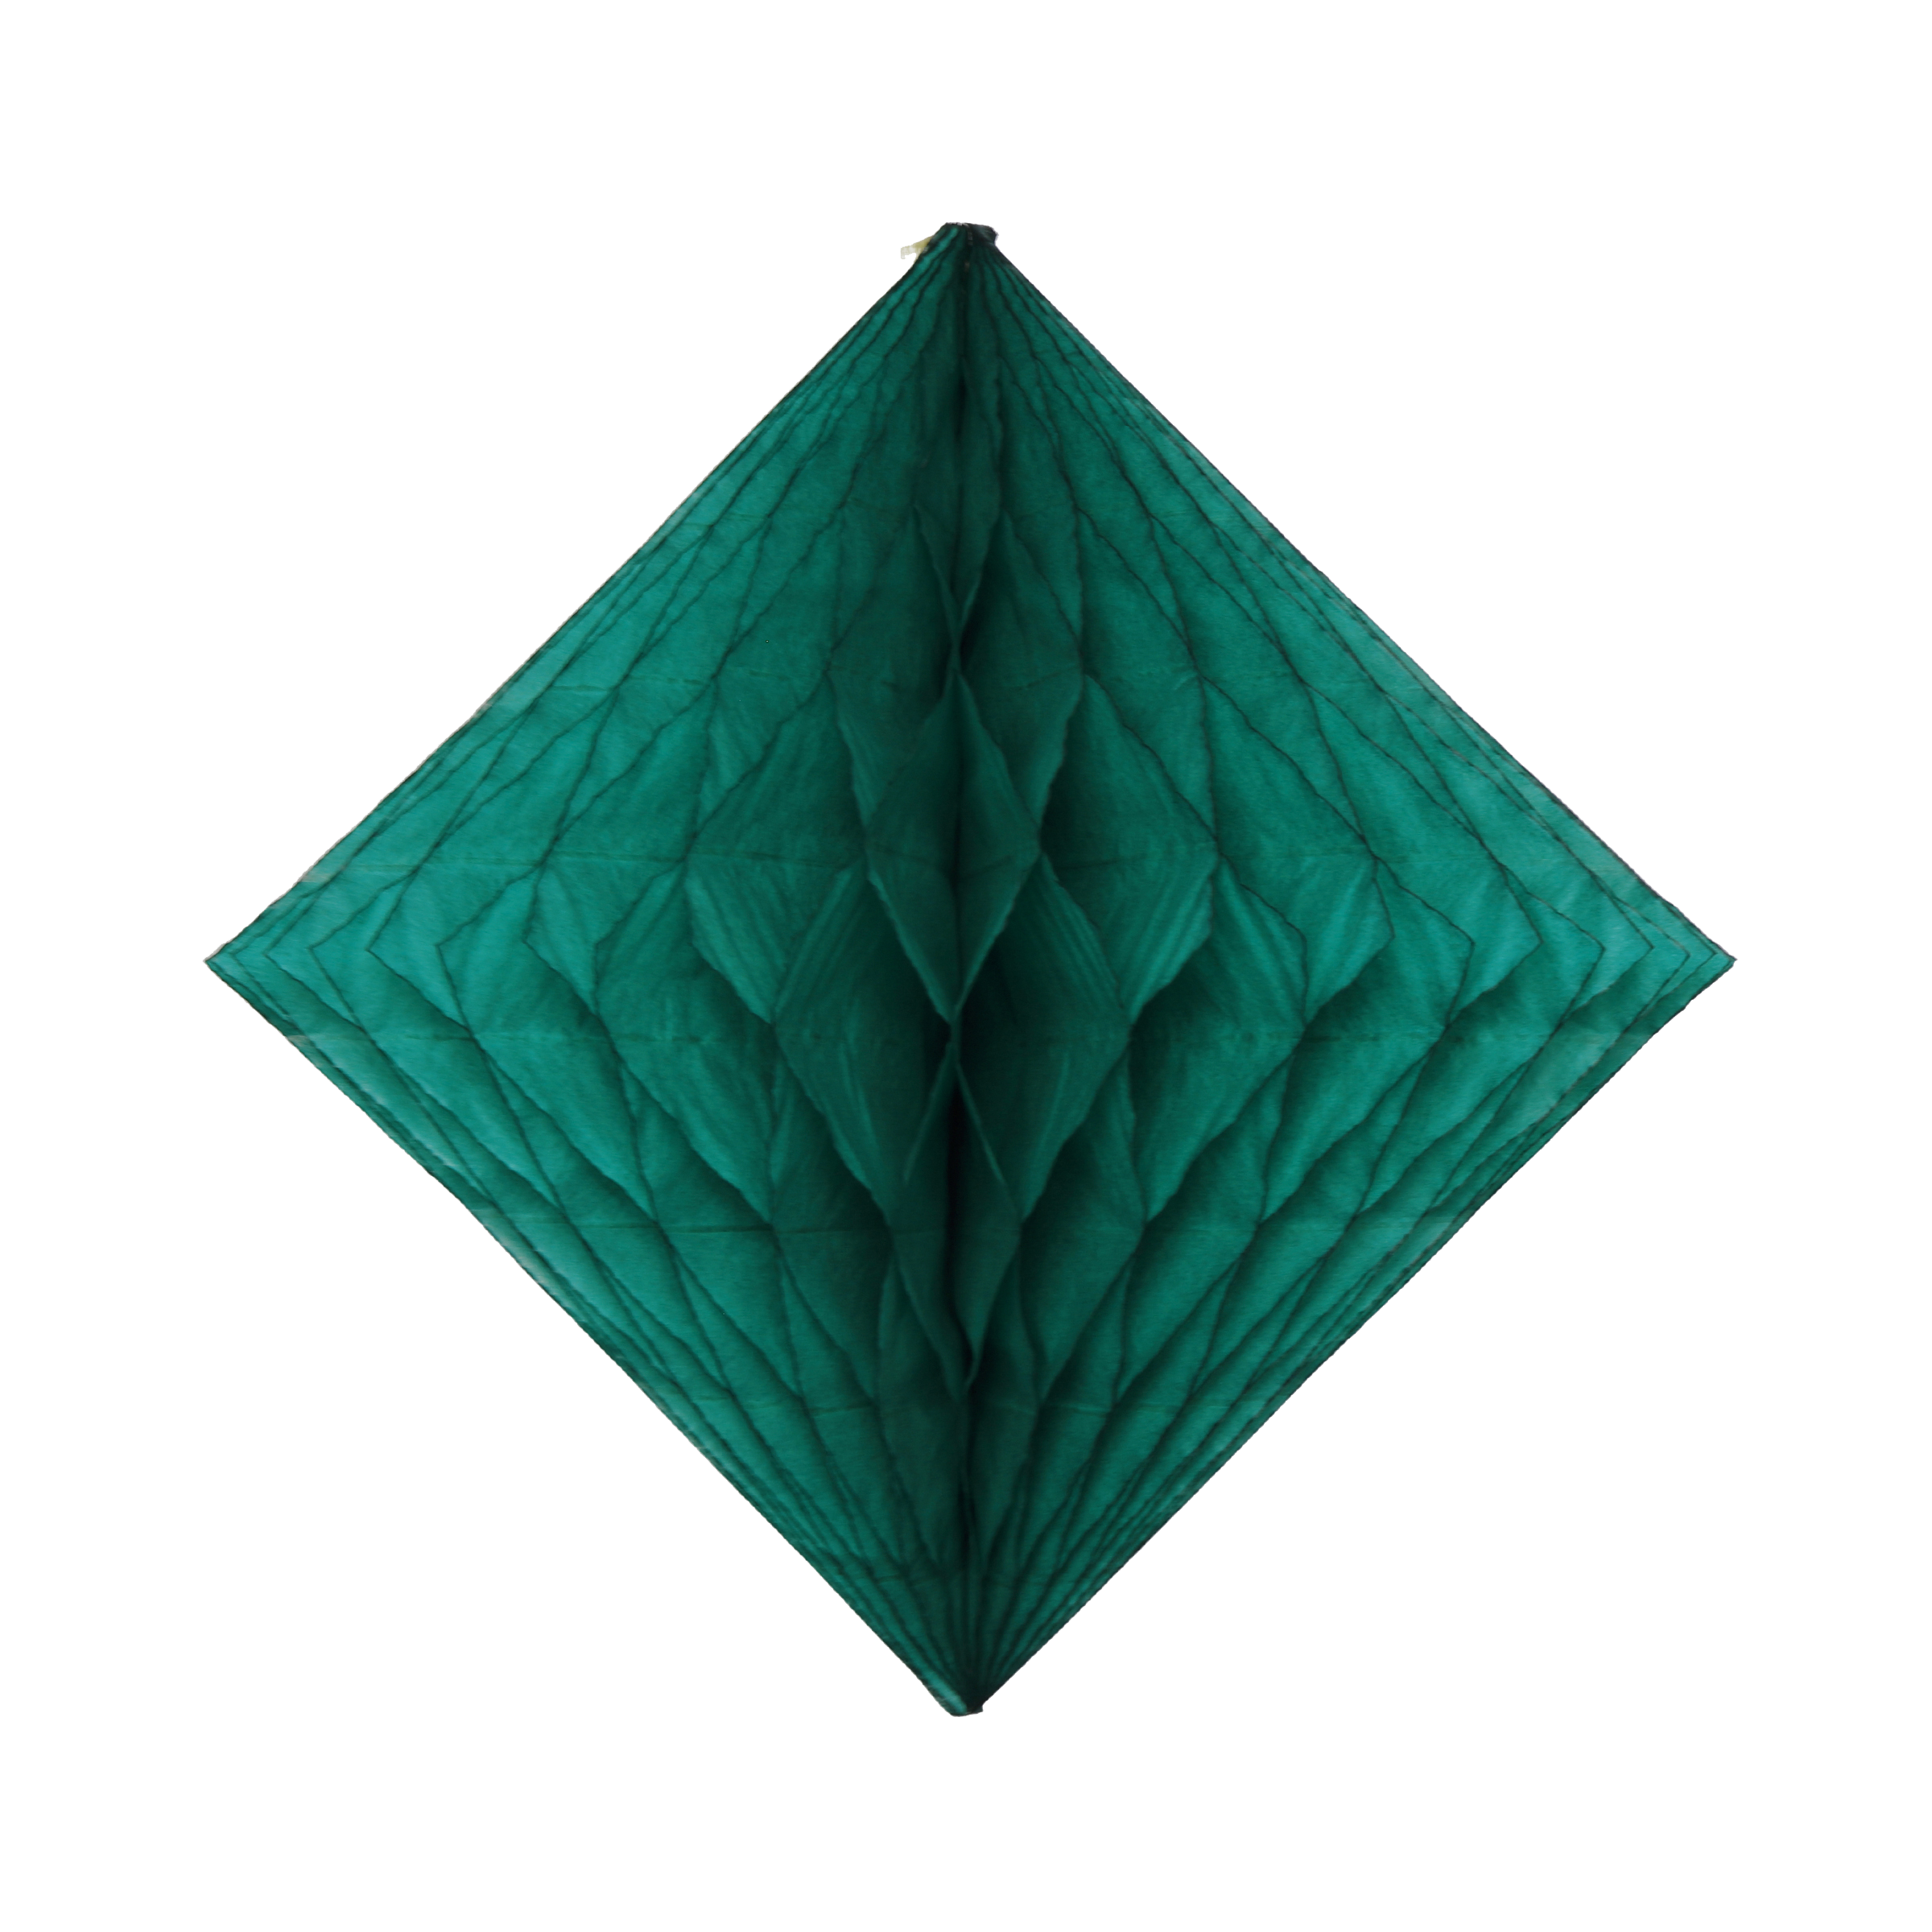 Honeycomb Diamond Emerald